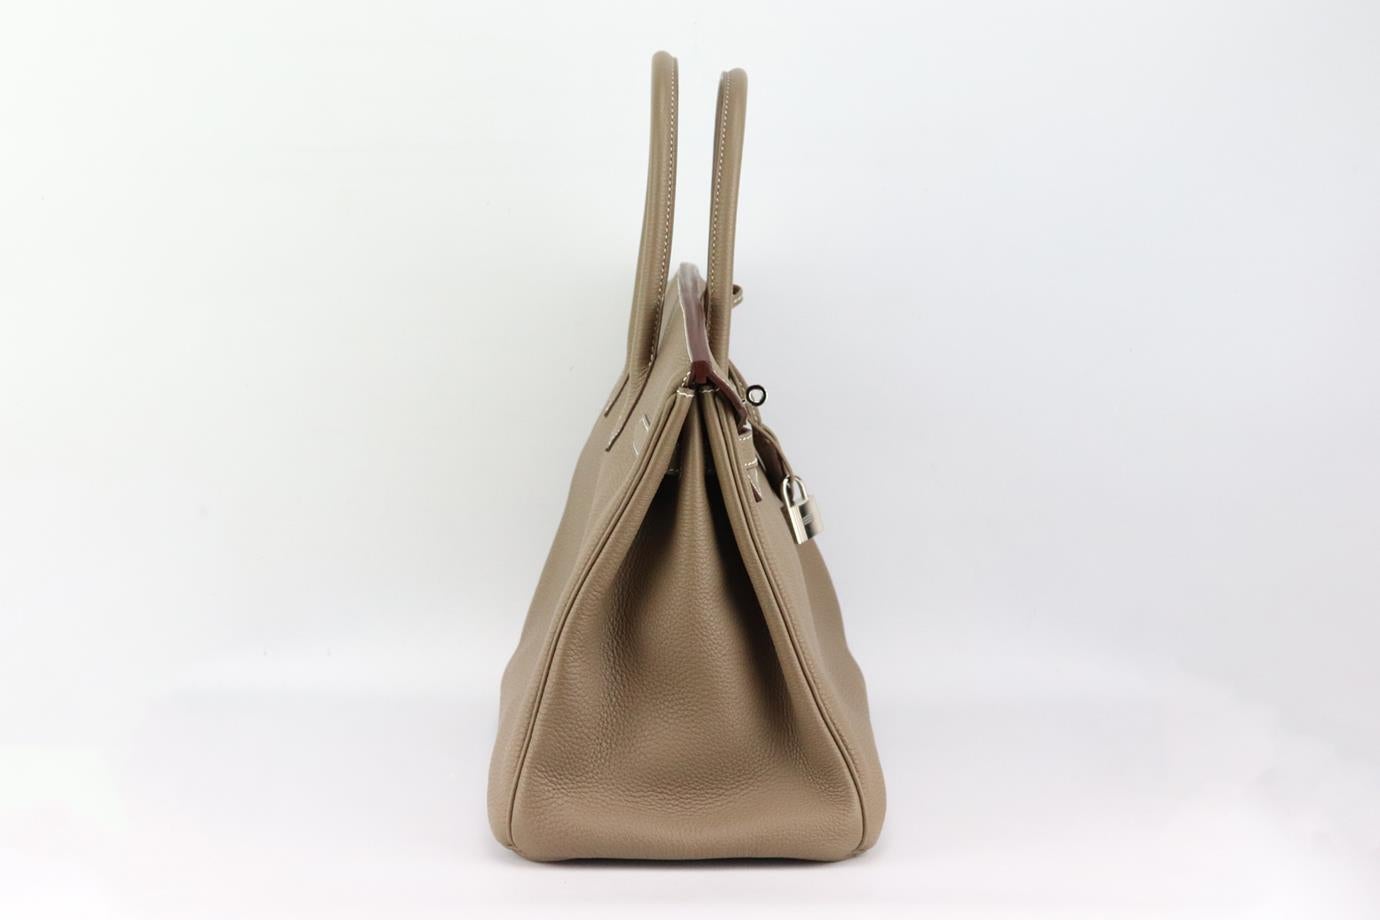 Hermès 2011 Birkin 35cm Togo Leather Bag Pour femmes en vente